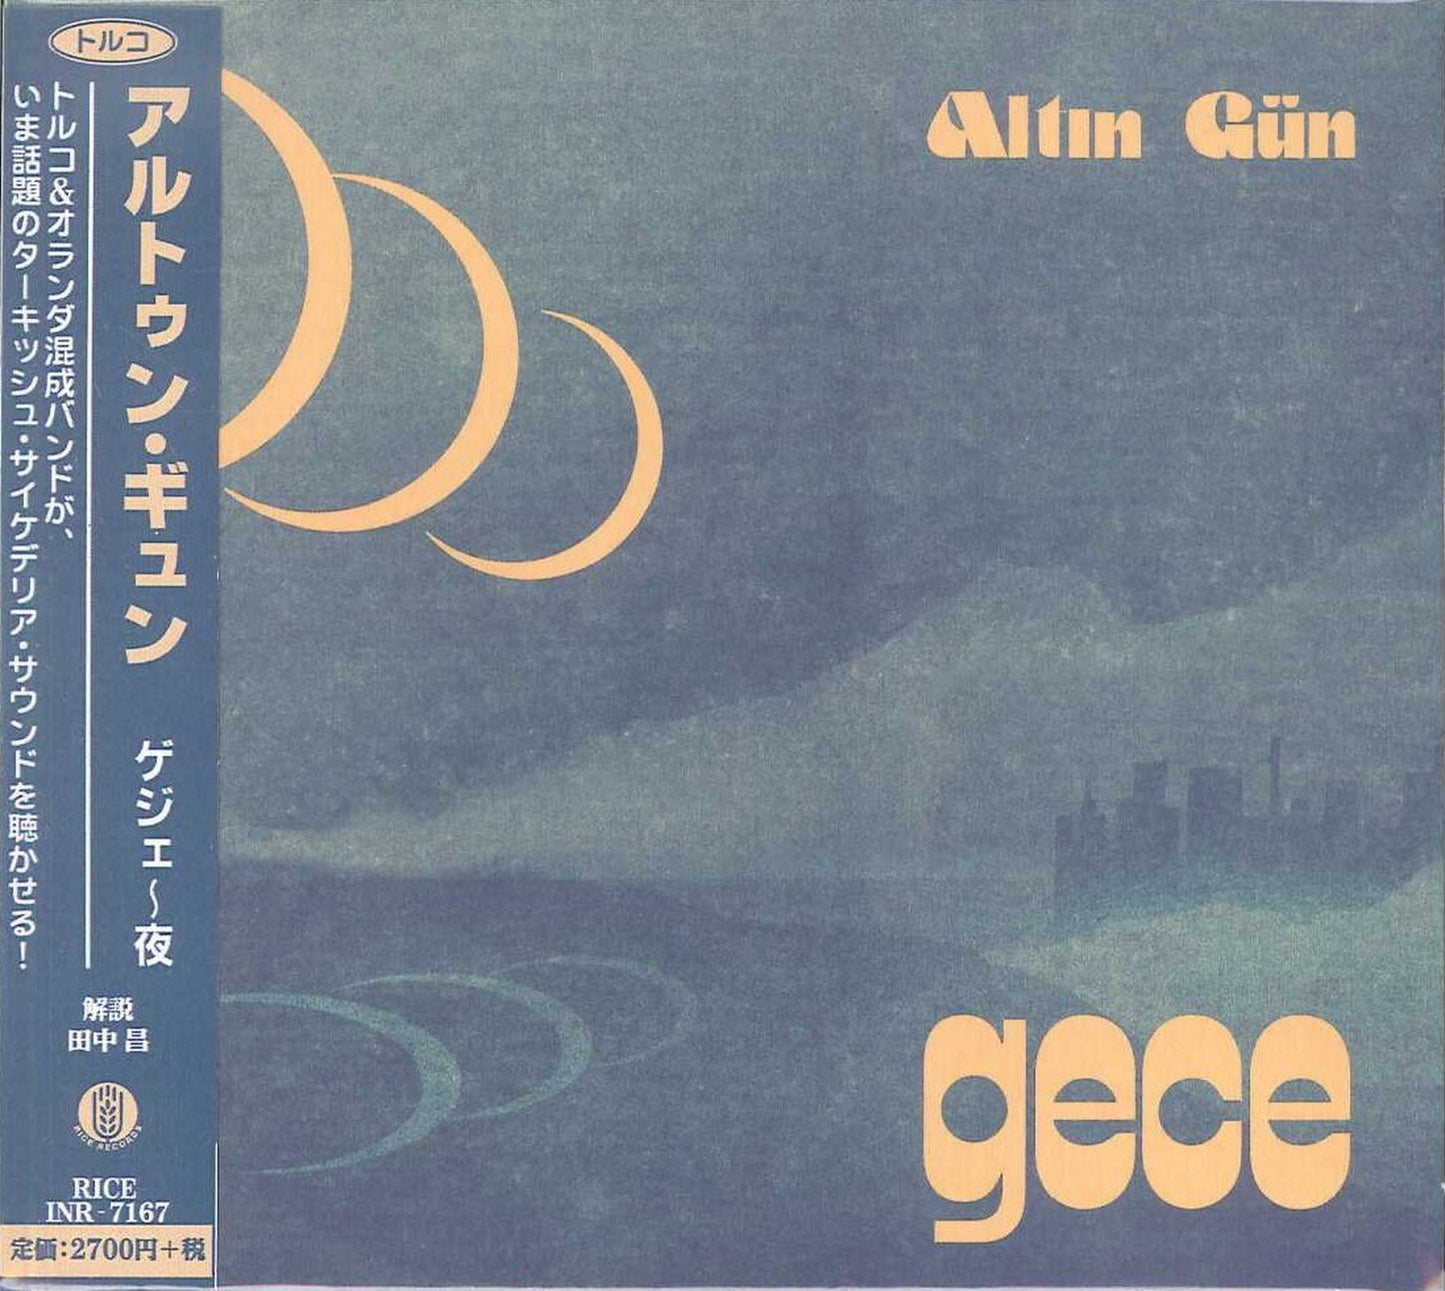 Altin Gun - Gece - Japan CD